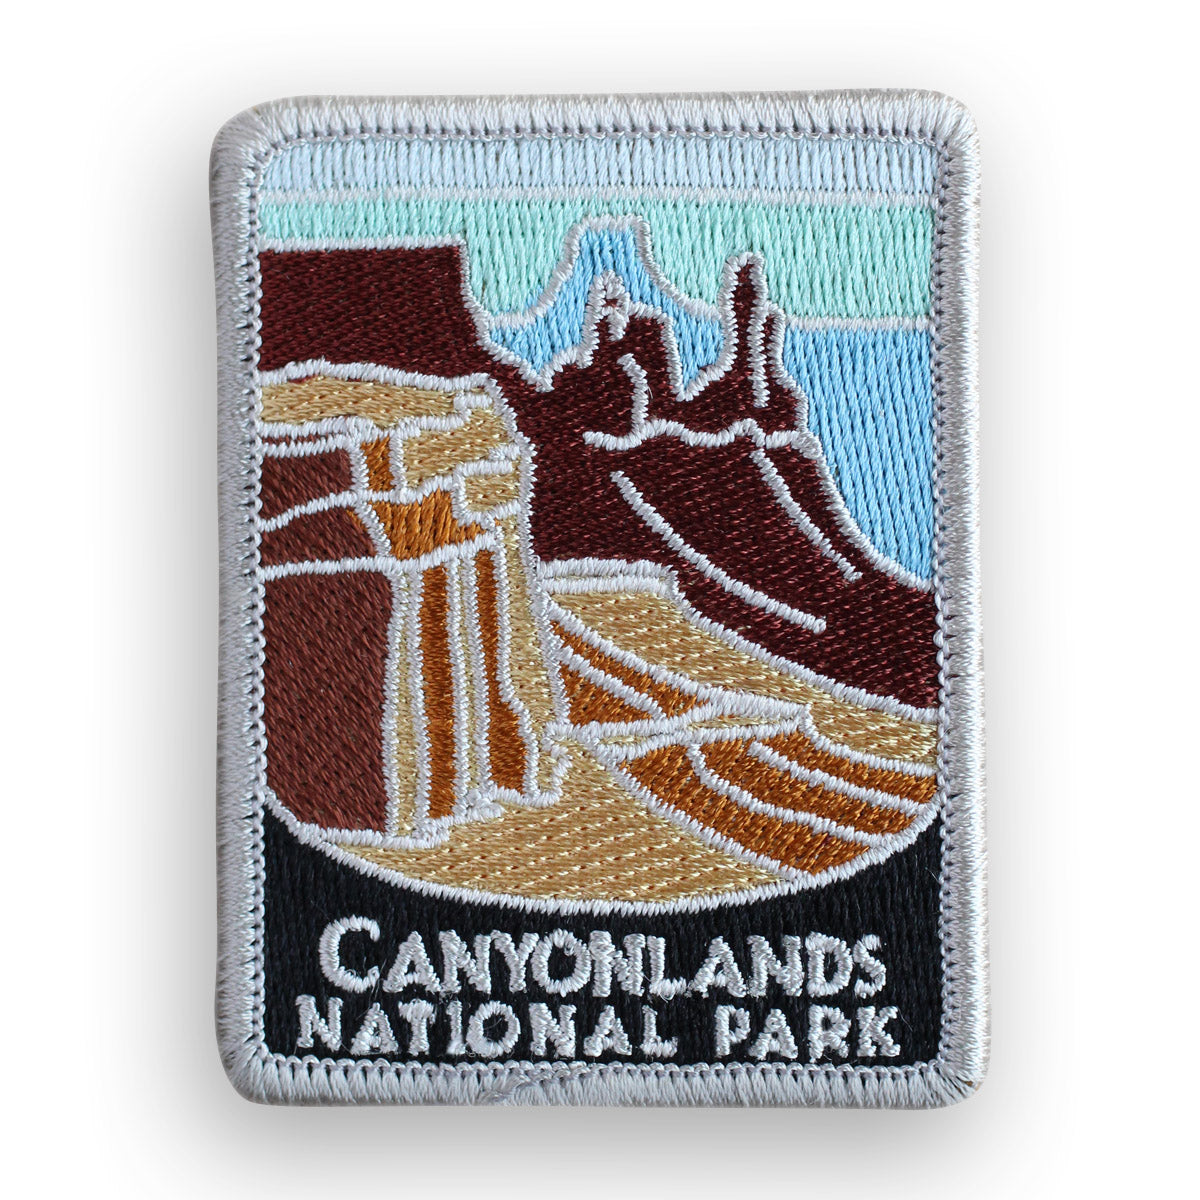 Canyonlands National Park Traveler Patch